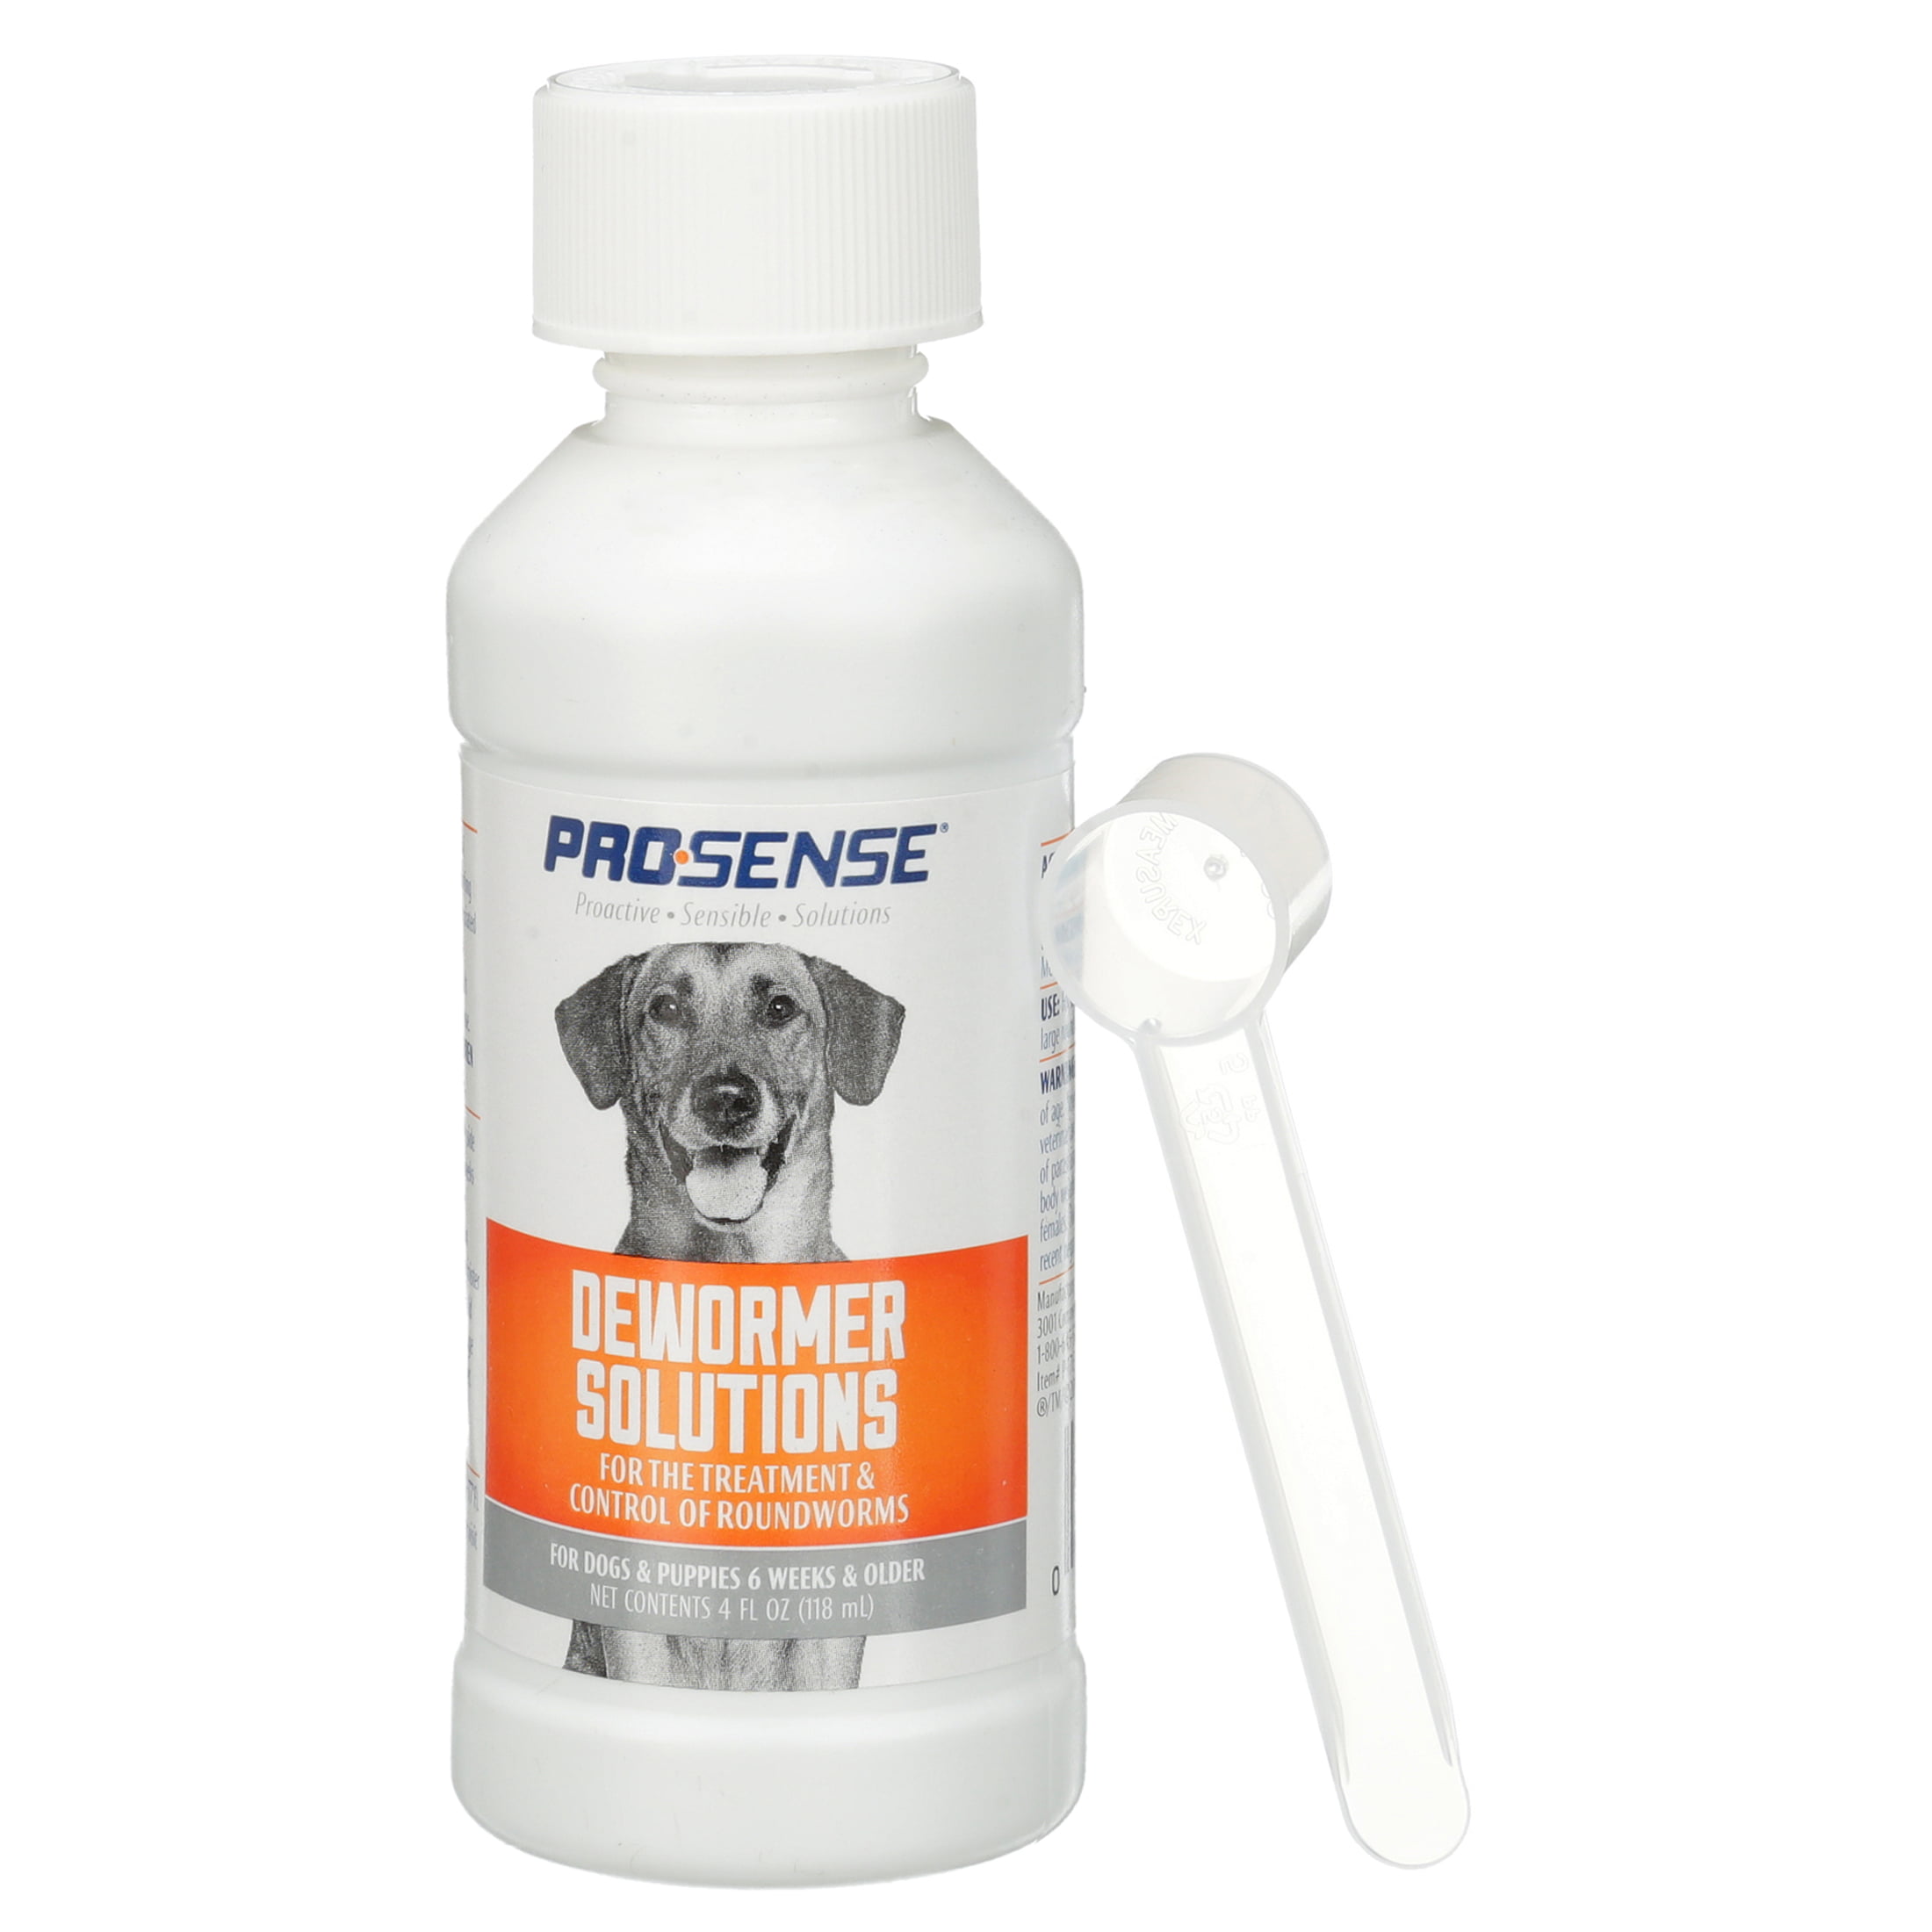 Pro Sense Dewormer Solutions Roundworm Treatment For Dogs 4 Oz Walmart Com Walmart Com